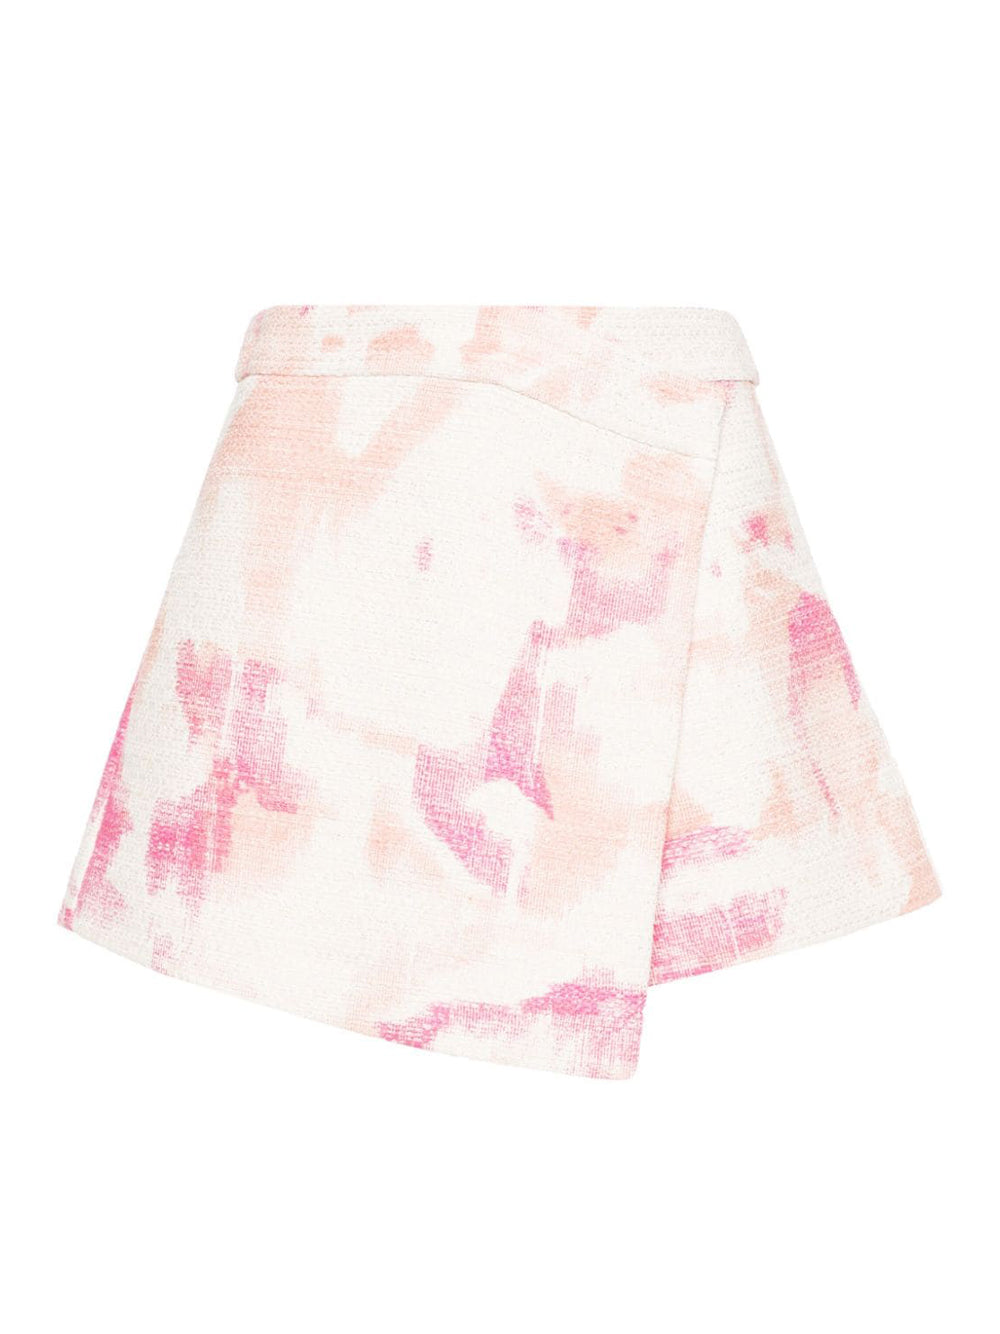 Ermuda/shorts Pink